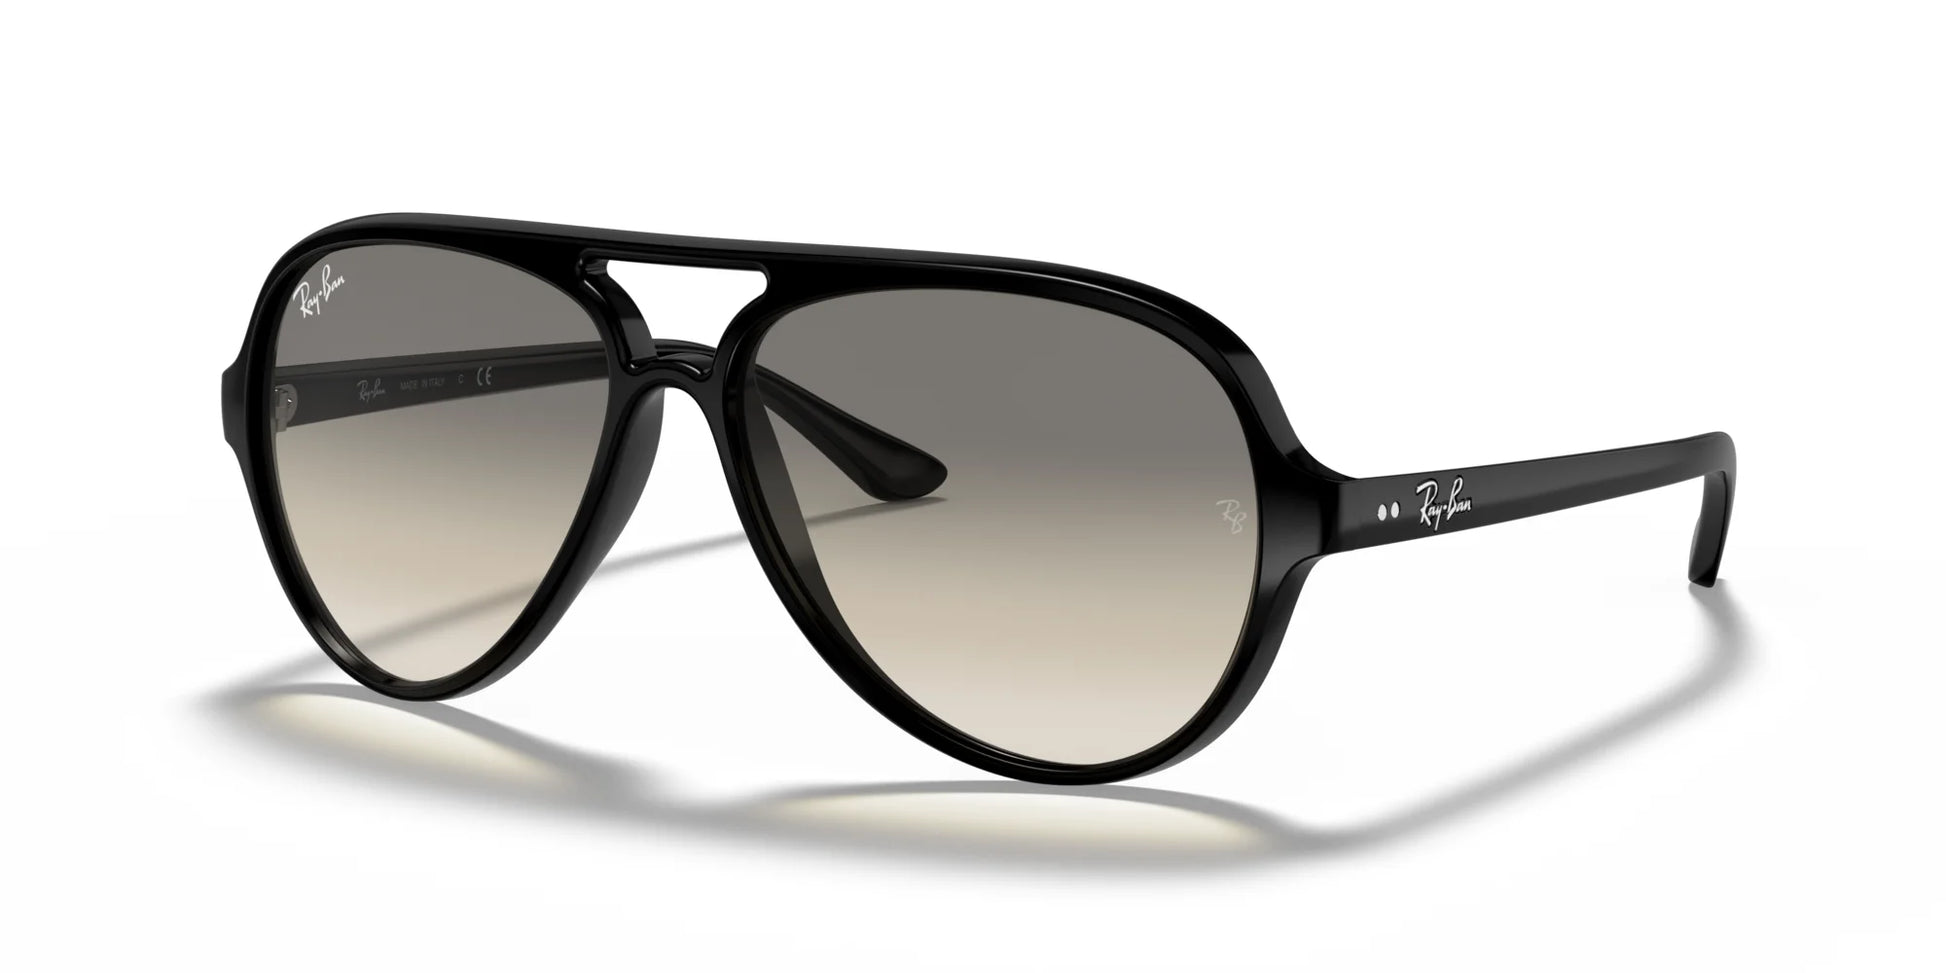 Ray-Ban CATS 5000 RB4125 Sunglasses Black / Light Grey Gradient